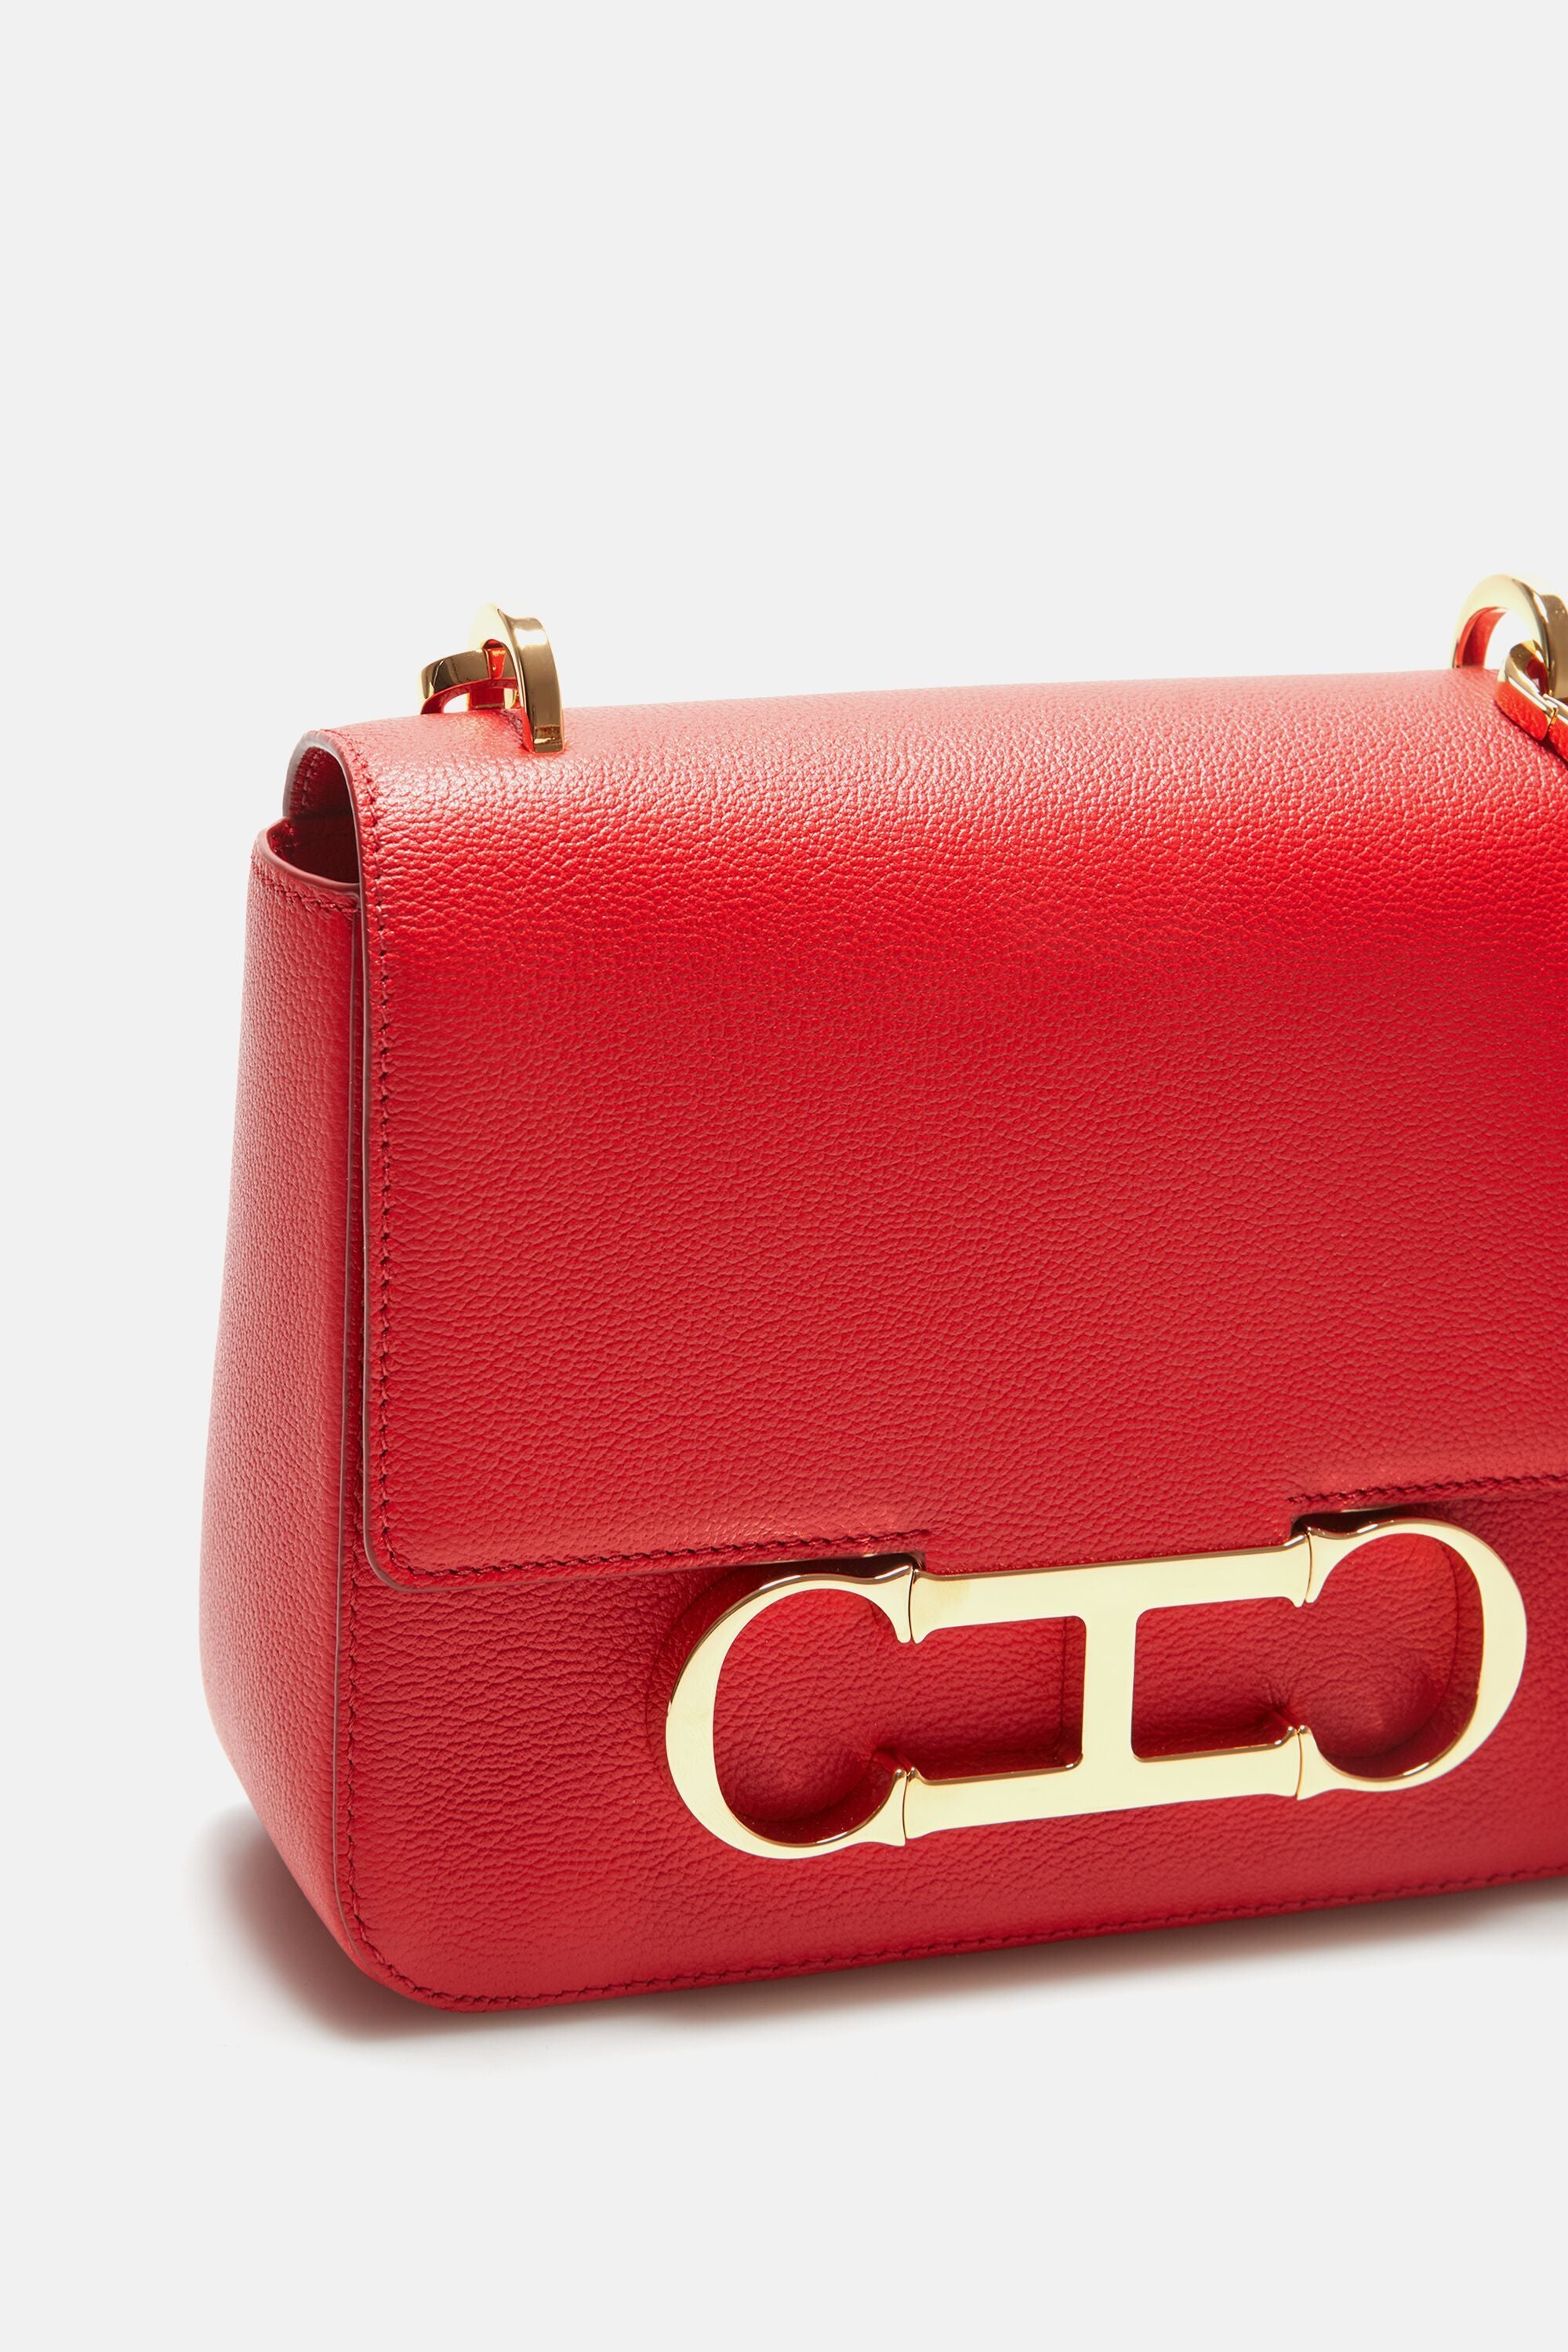 Carolina Herrera Initials Insignia Medium Shoulder Bag - Red